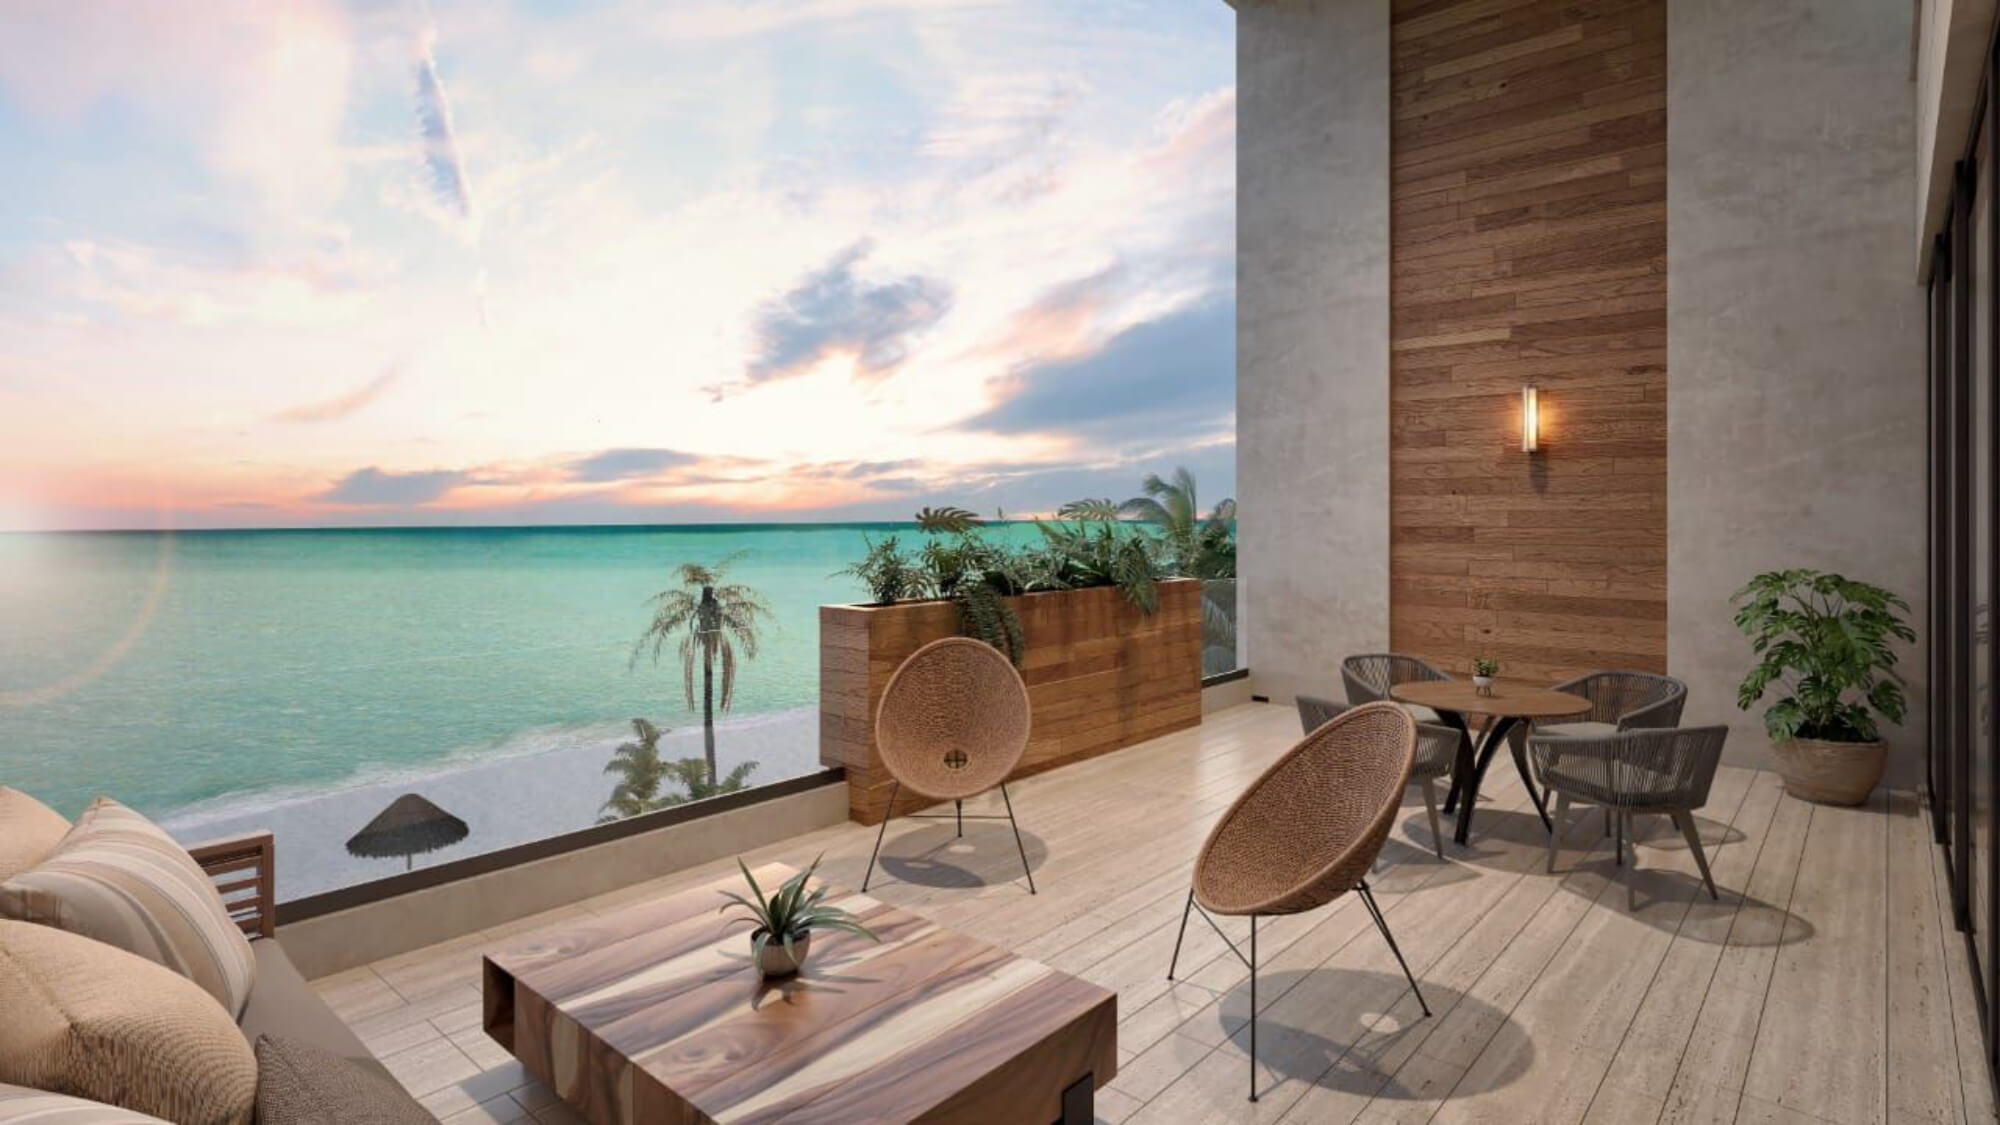 Condominium with ocean view pool and more amenities for sale Yucatan.